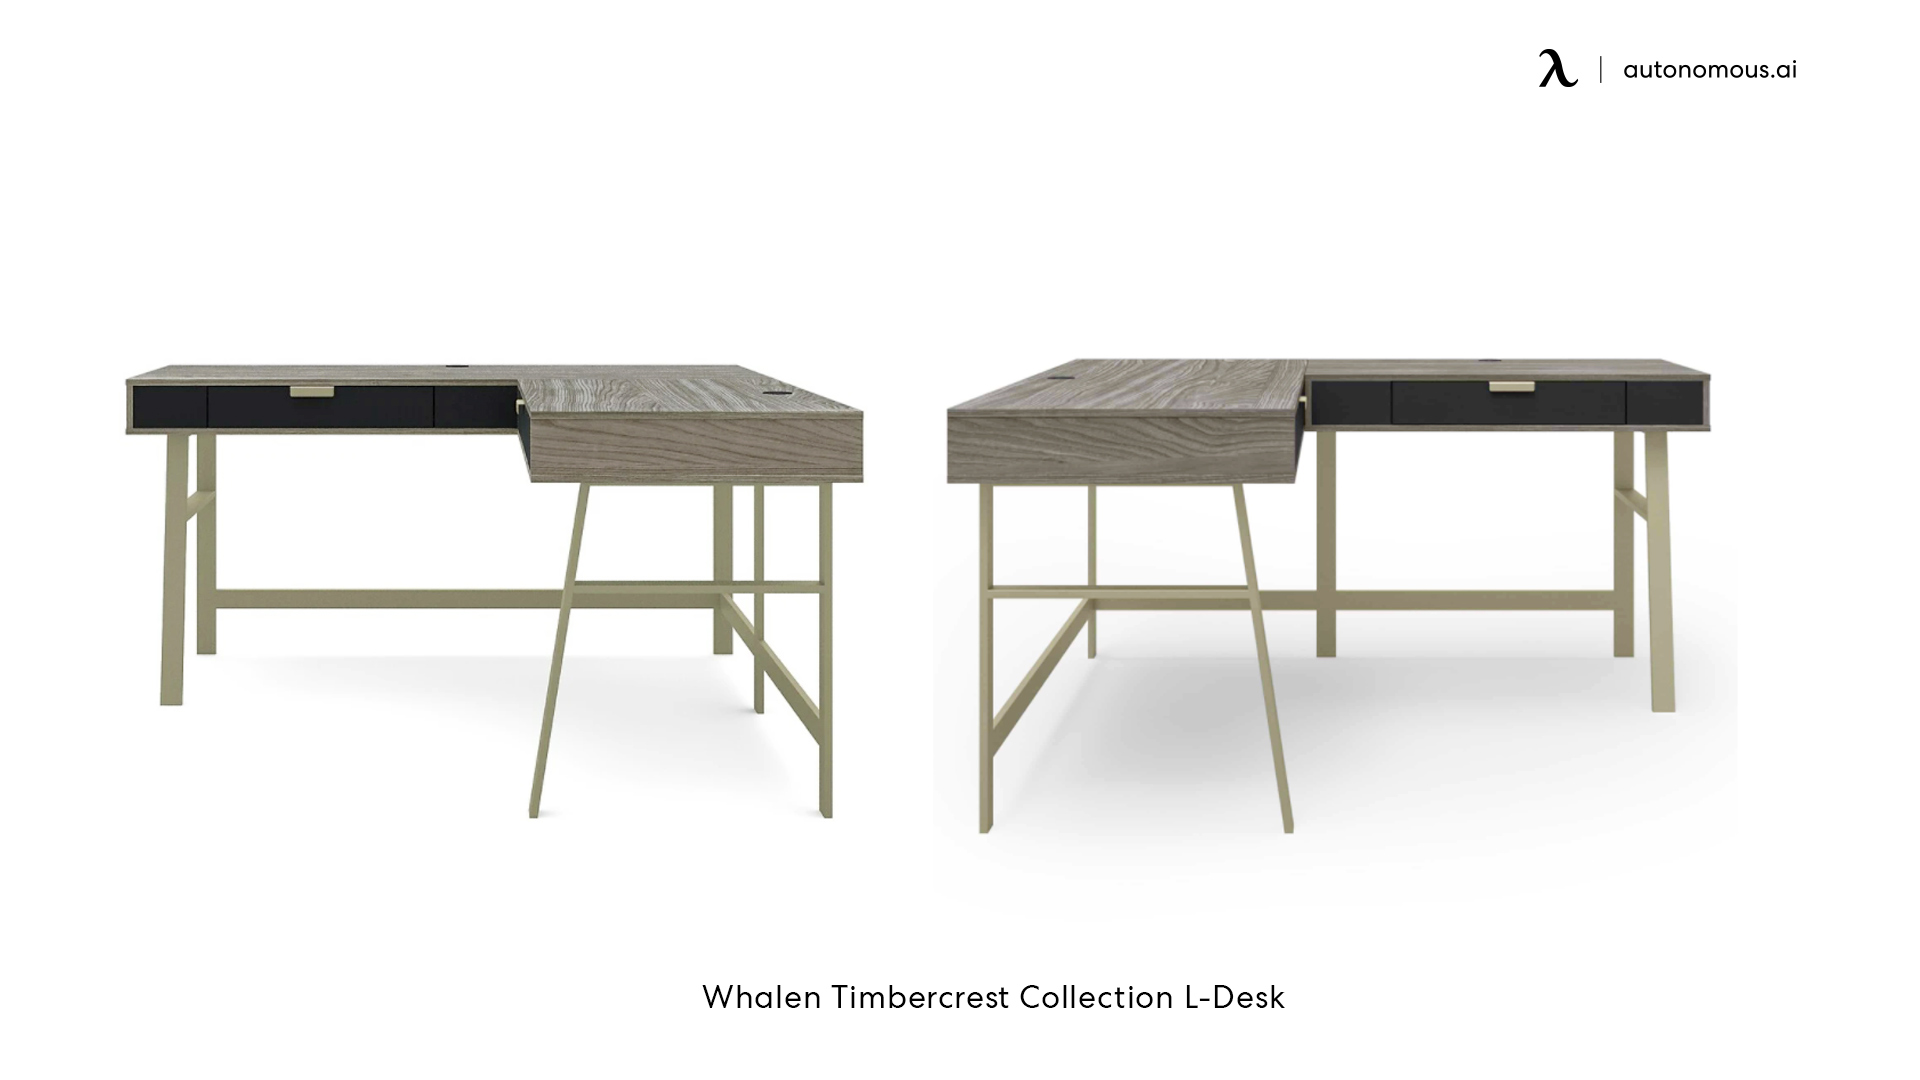 Whalen Timbercrest Collection L-Desk